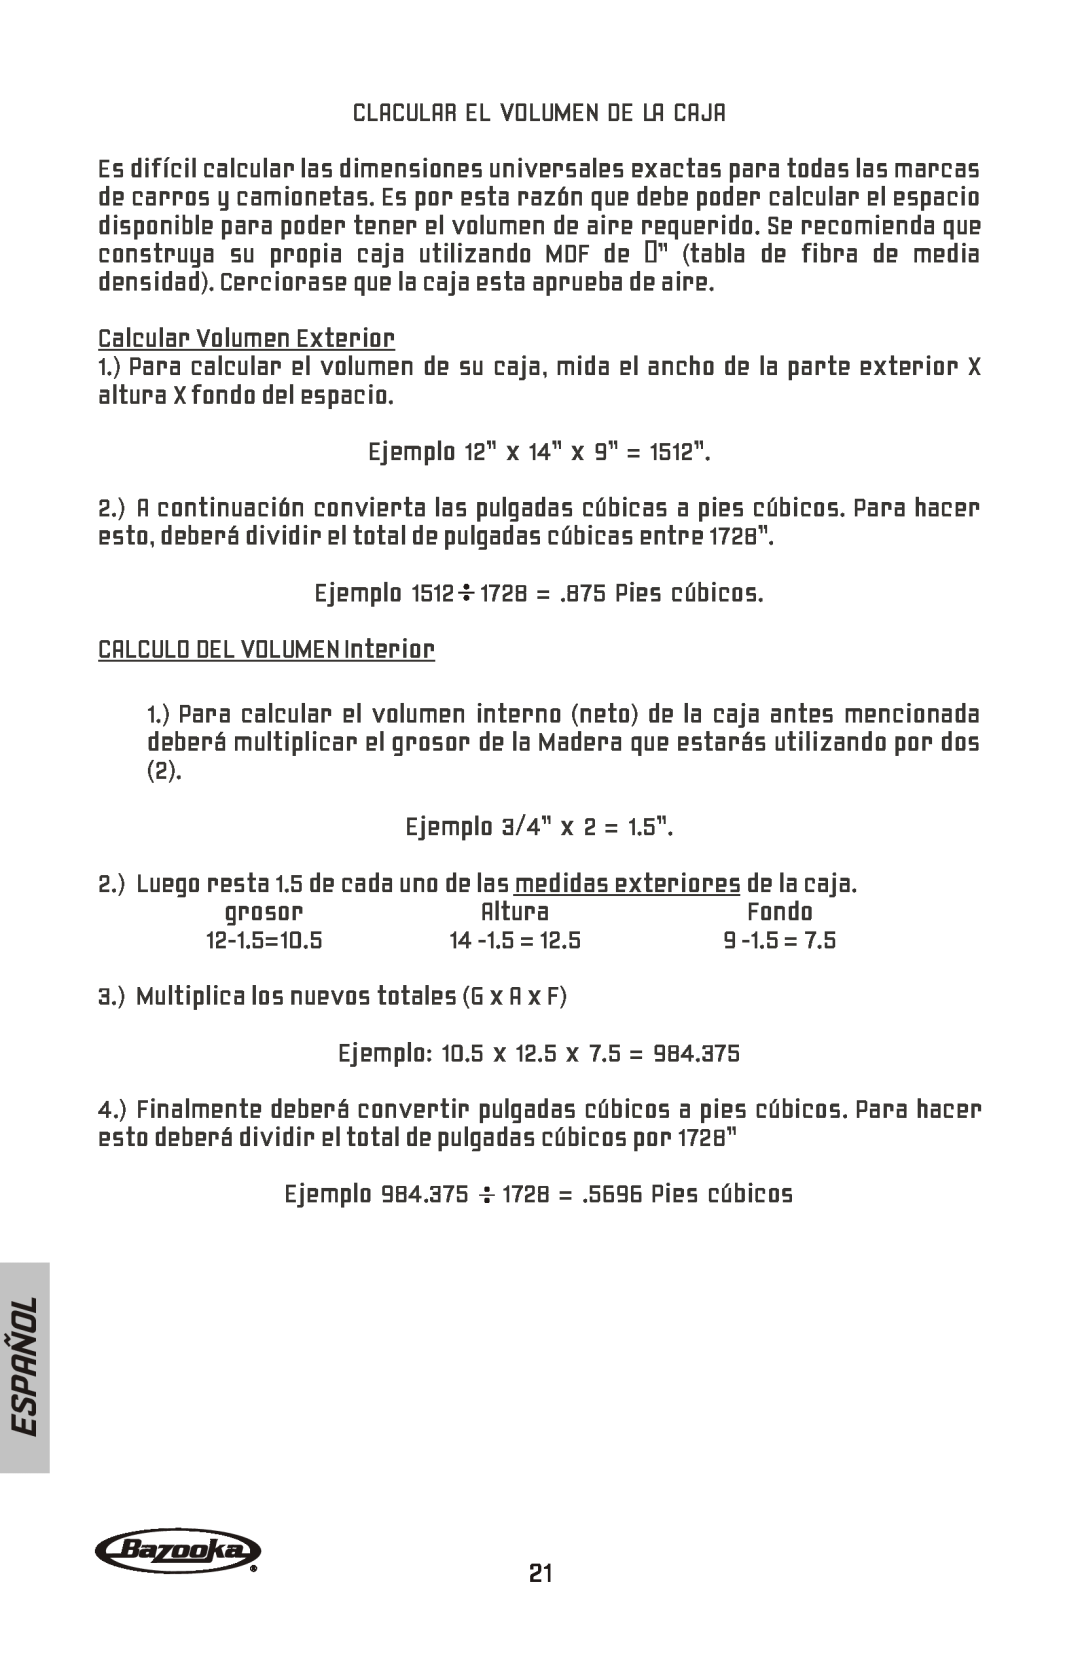 Bazooka BW1024, BW1224, BW1214, BW1014 manual Español, Clacular El Volumen De La Caja 